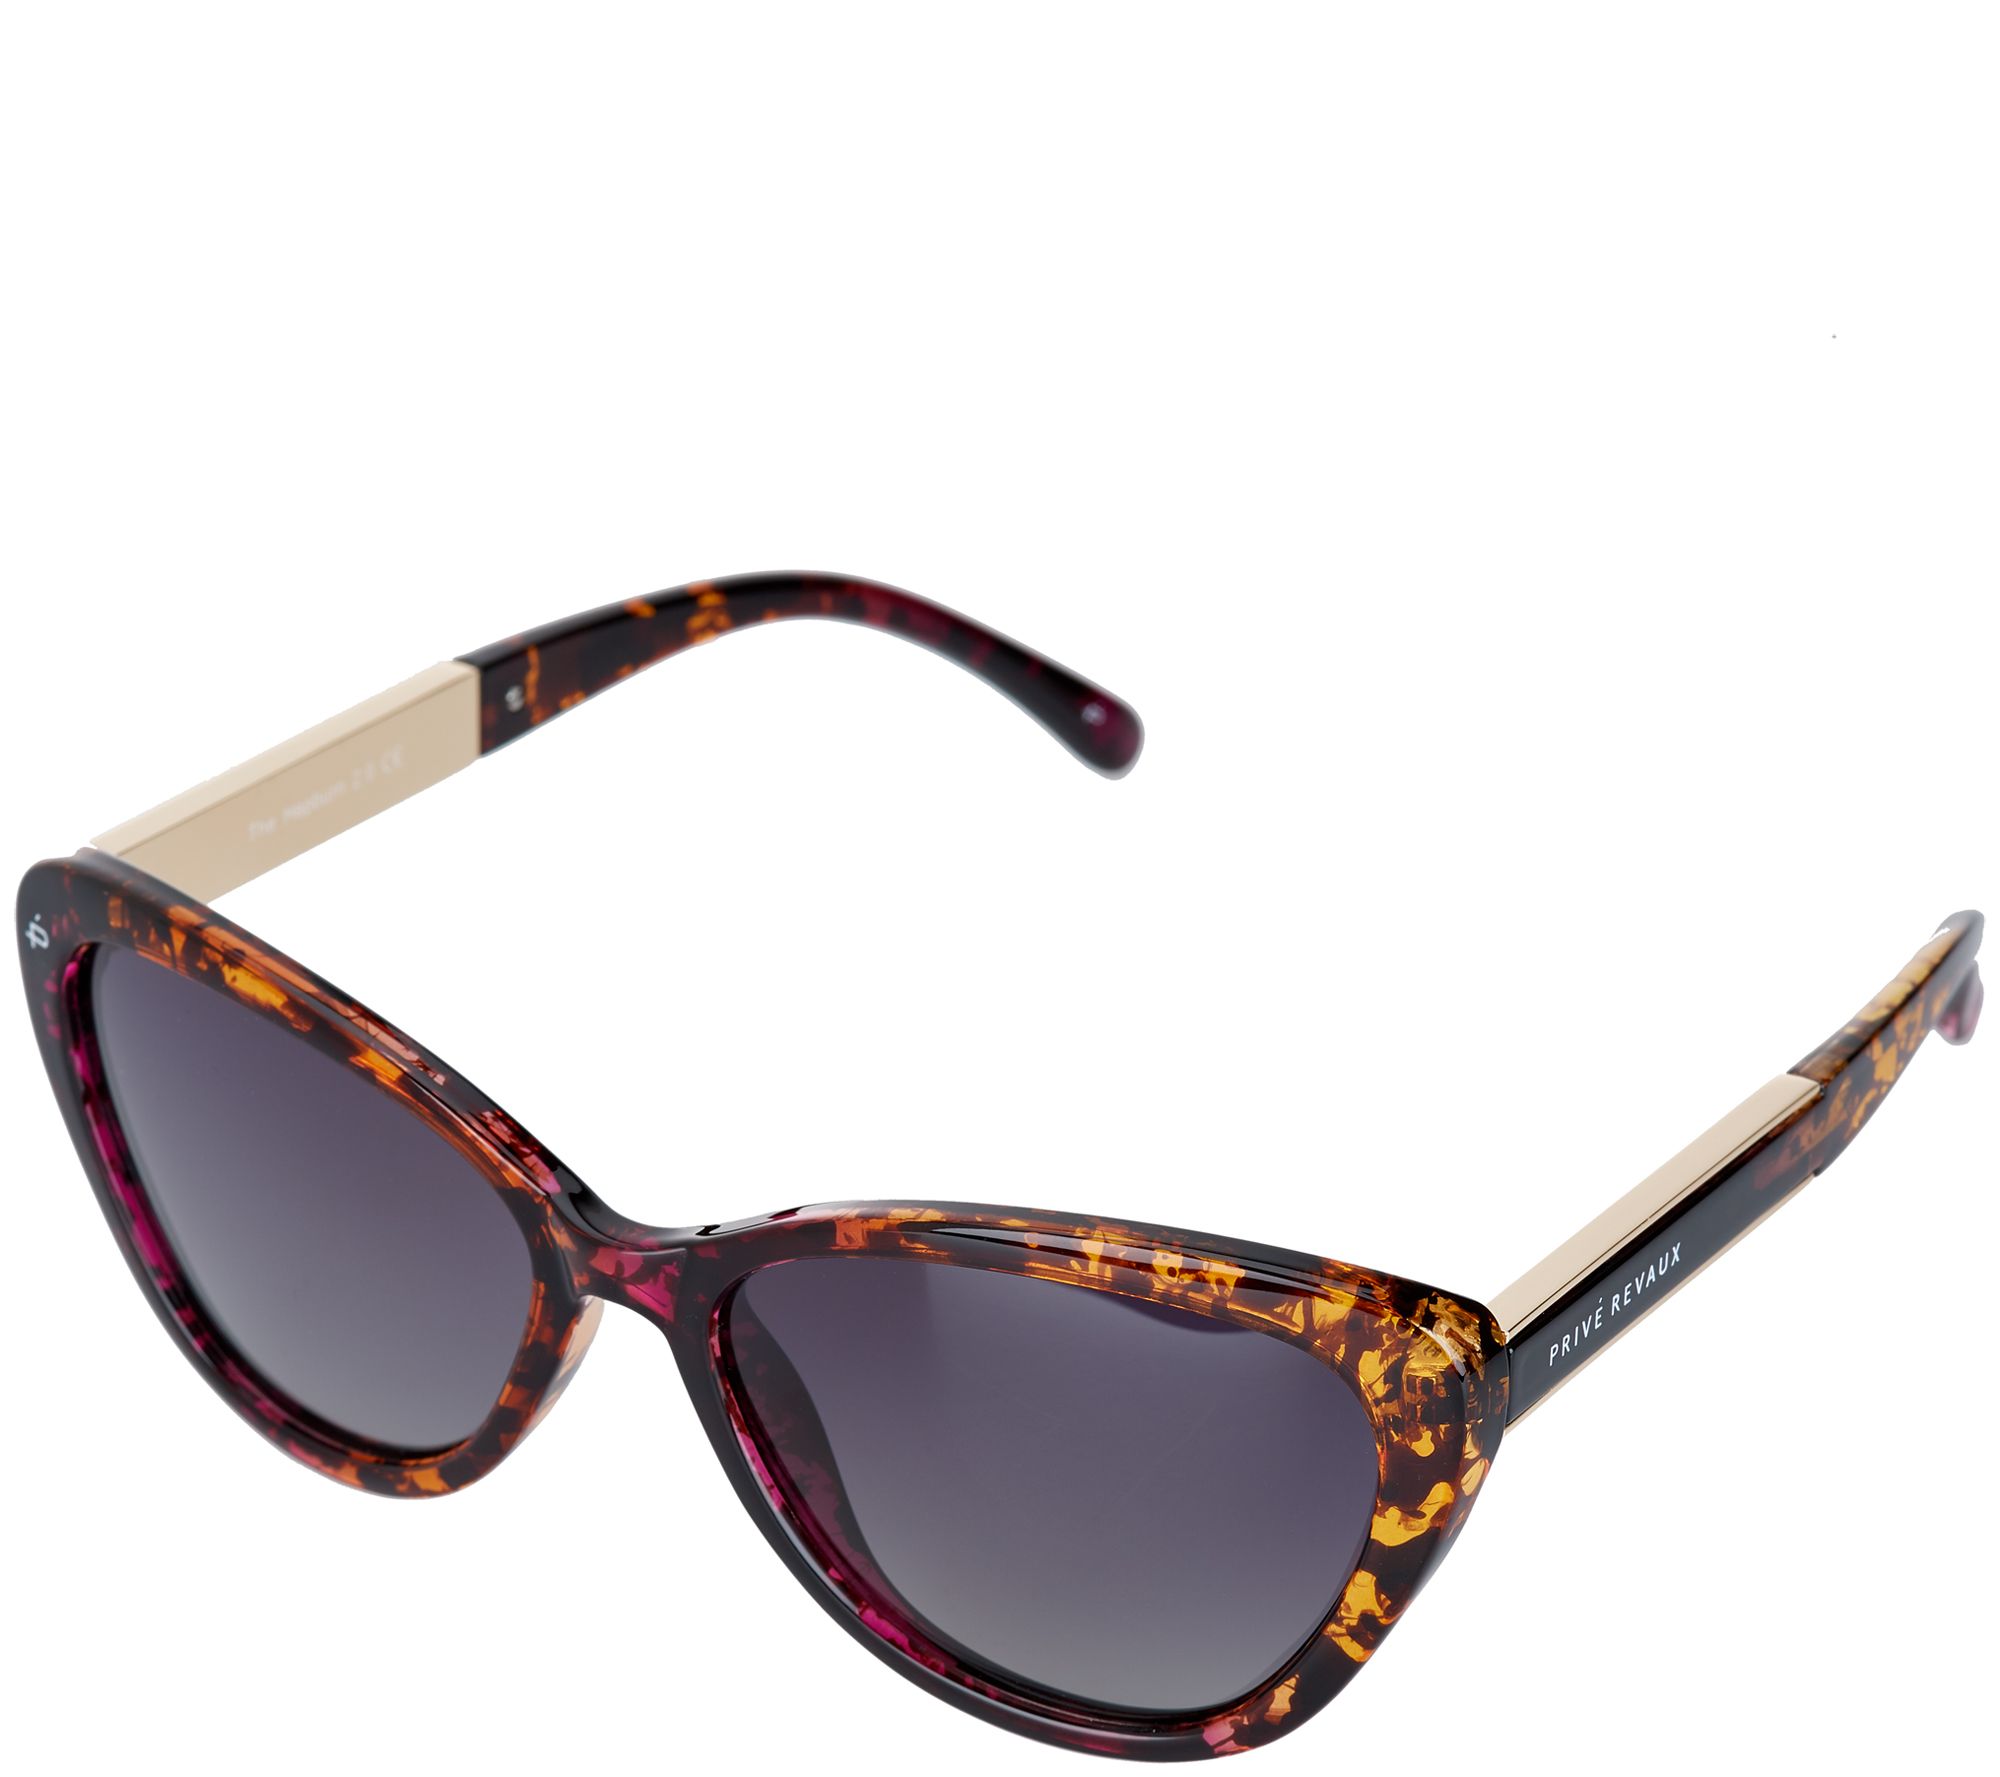 Prive Revaux The Hepburn 2.0 Cat-Eye Polarized Sunglasses